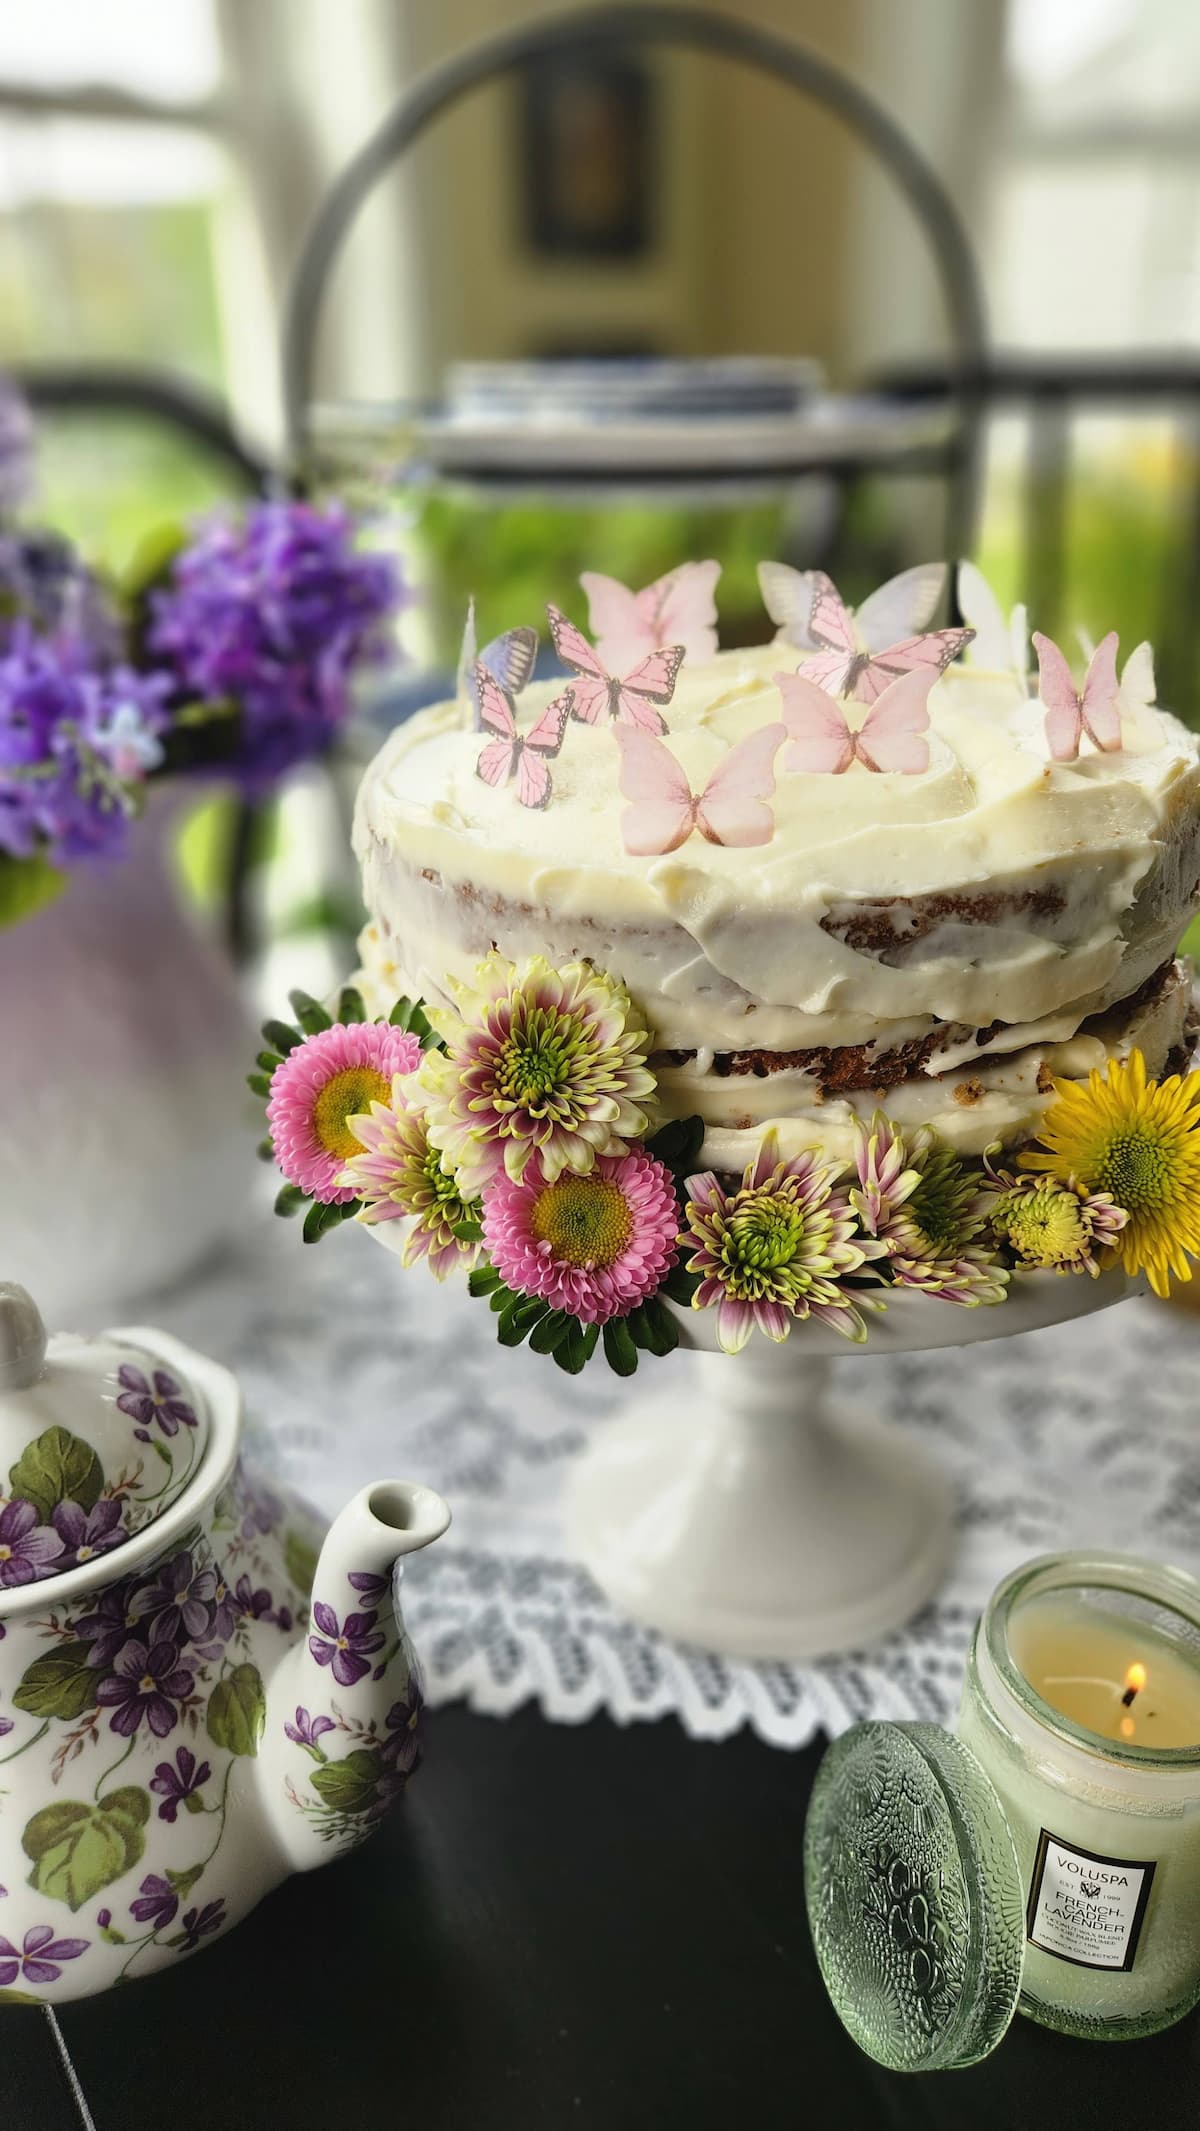 Amazing Cake Supplies: Easy Cake Decorating Ideas